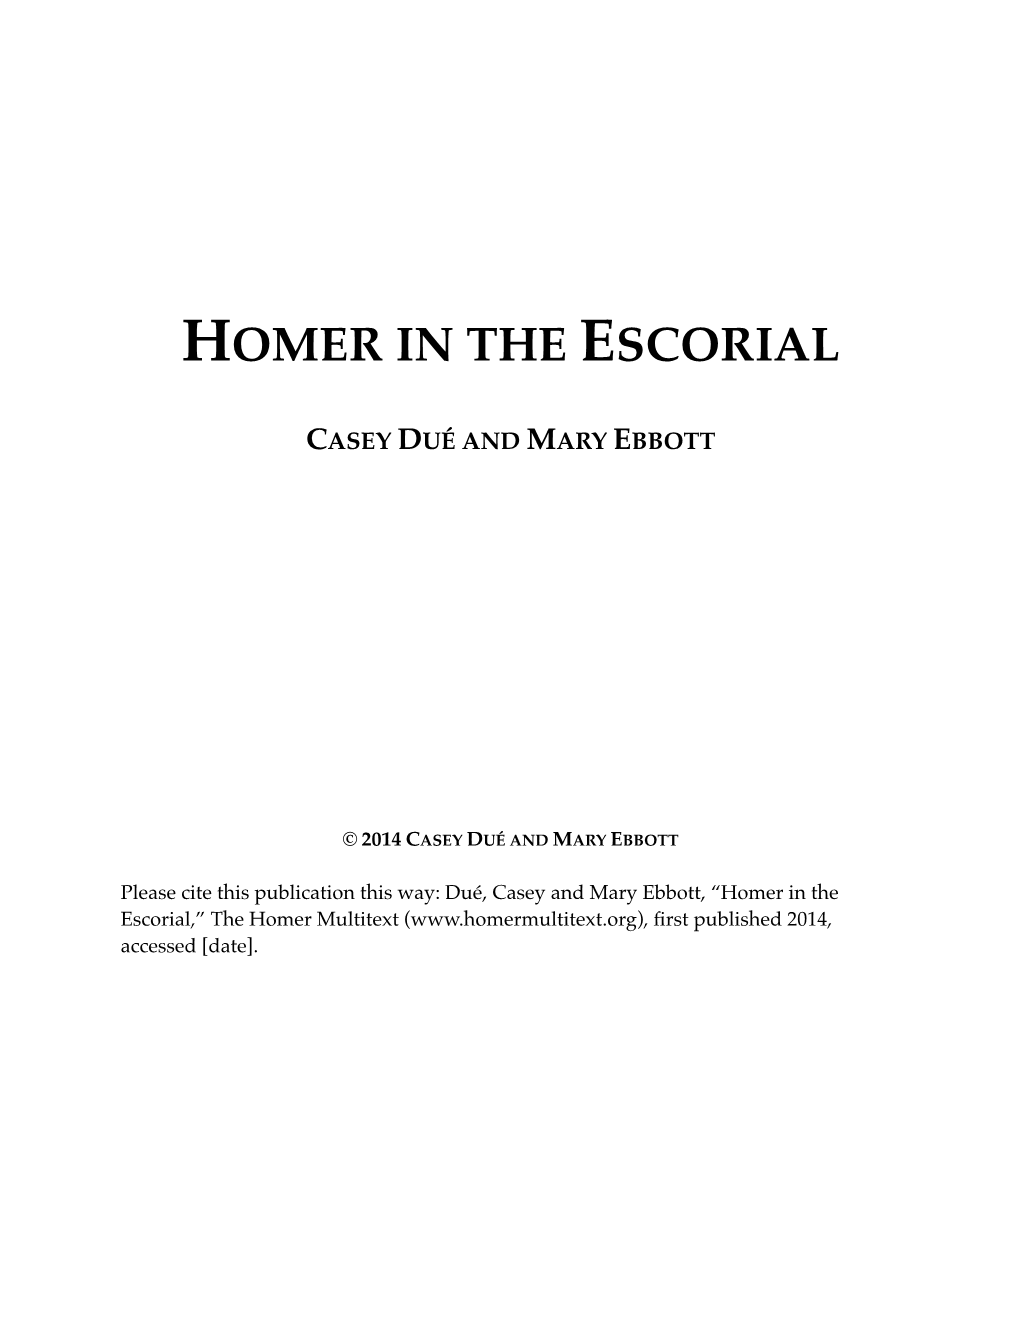 Revised Homer in the Escorial for Website